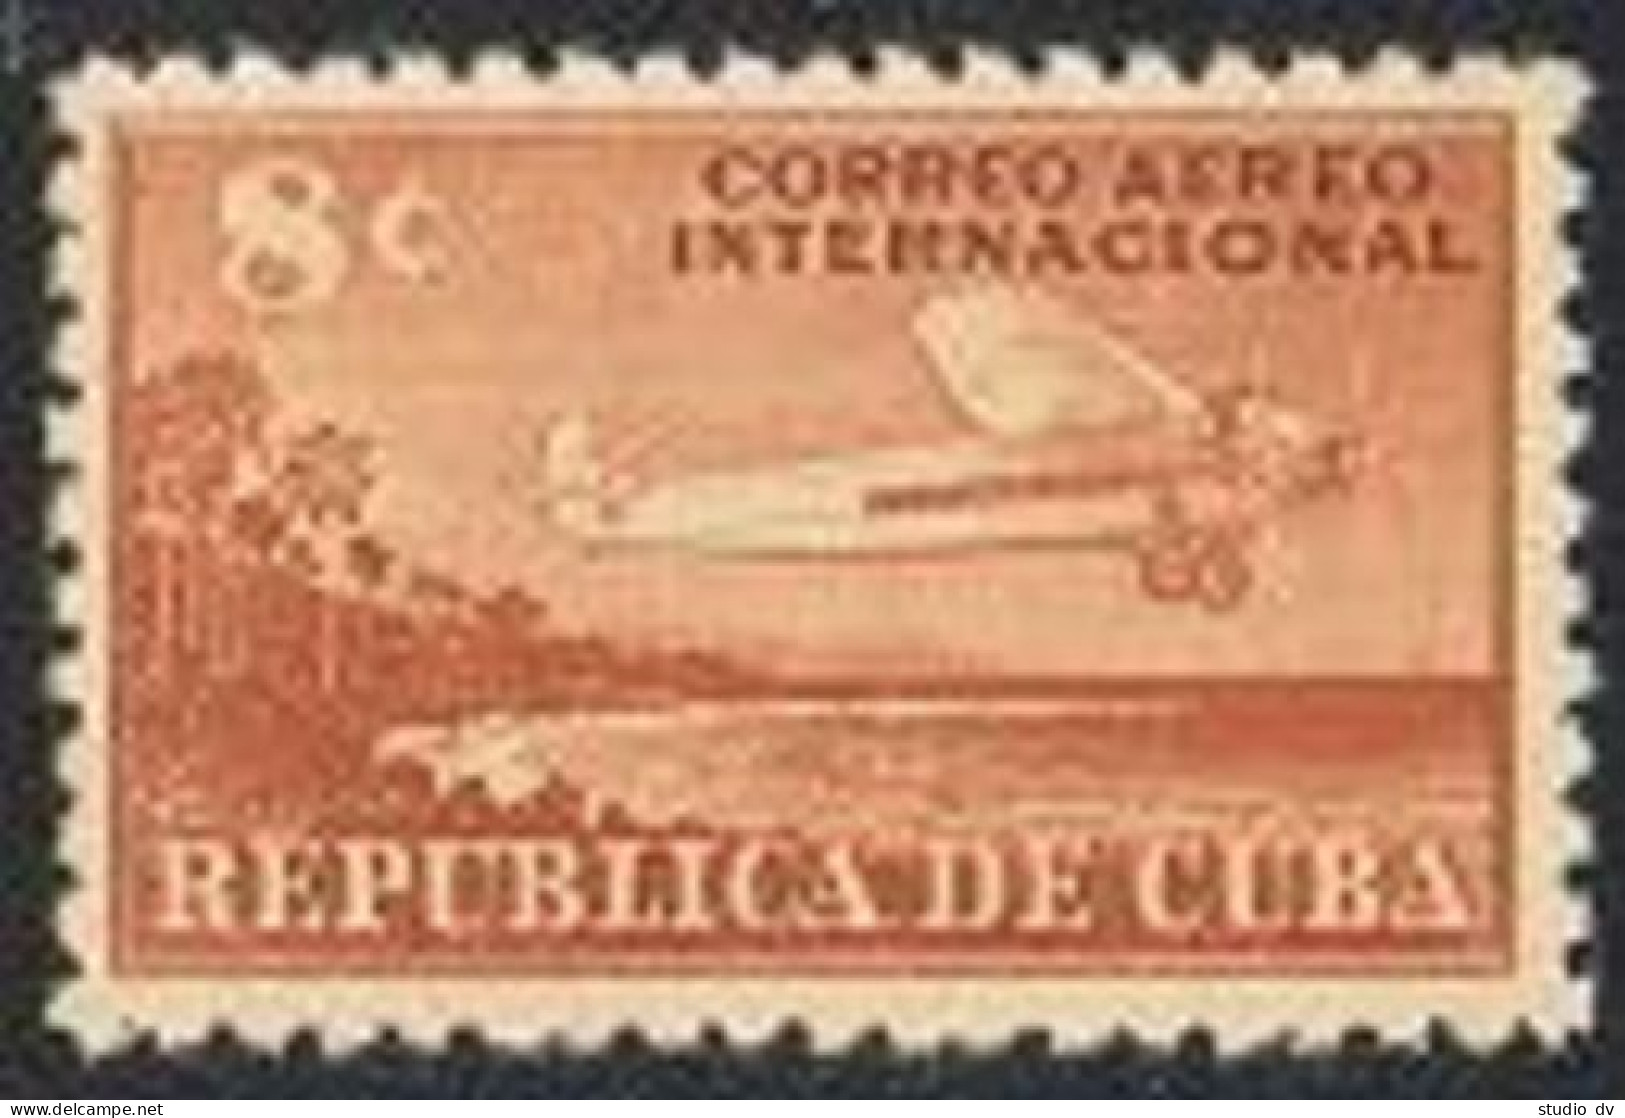 Cuba C40,MNH.Michel 220. Air Post 1948.Airplane,Coast Of Cuba. - Neufs